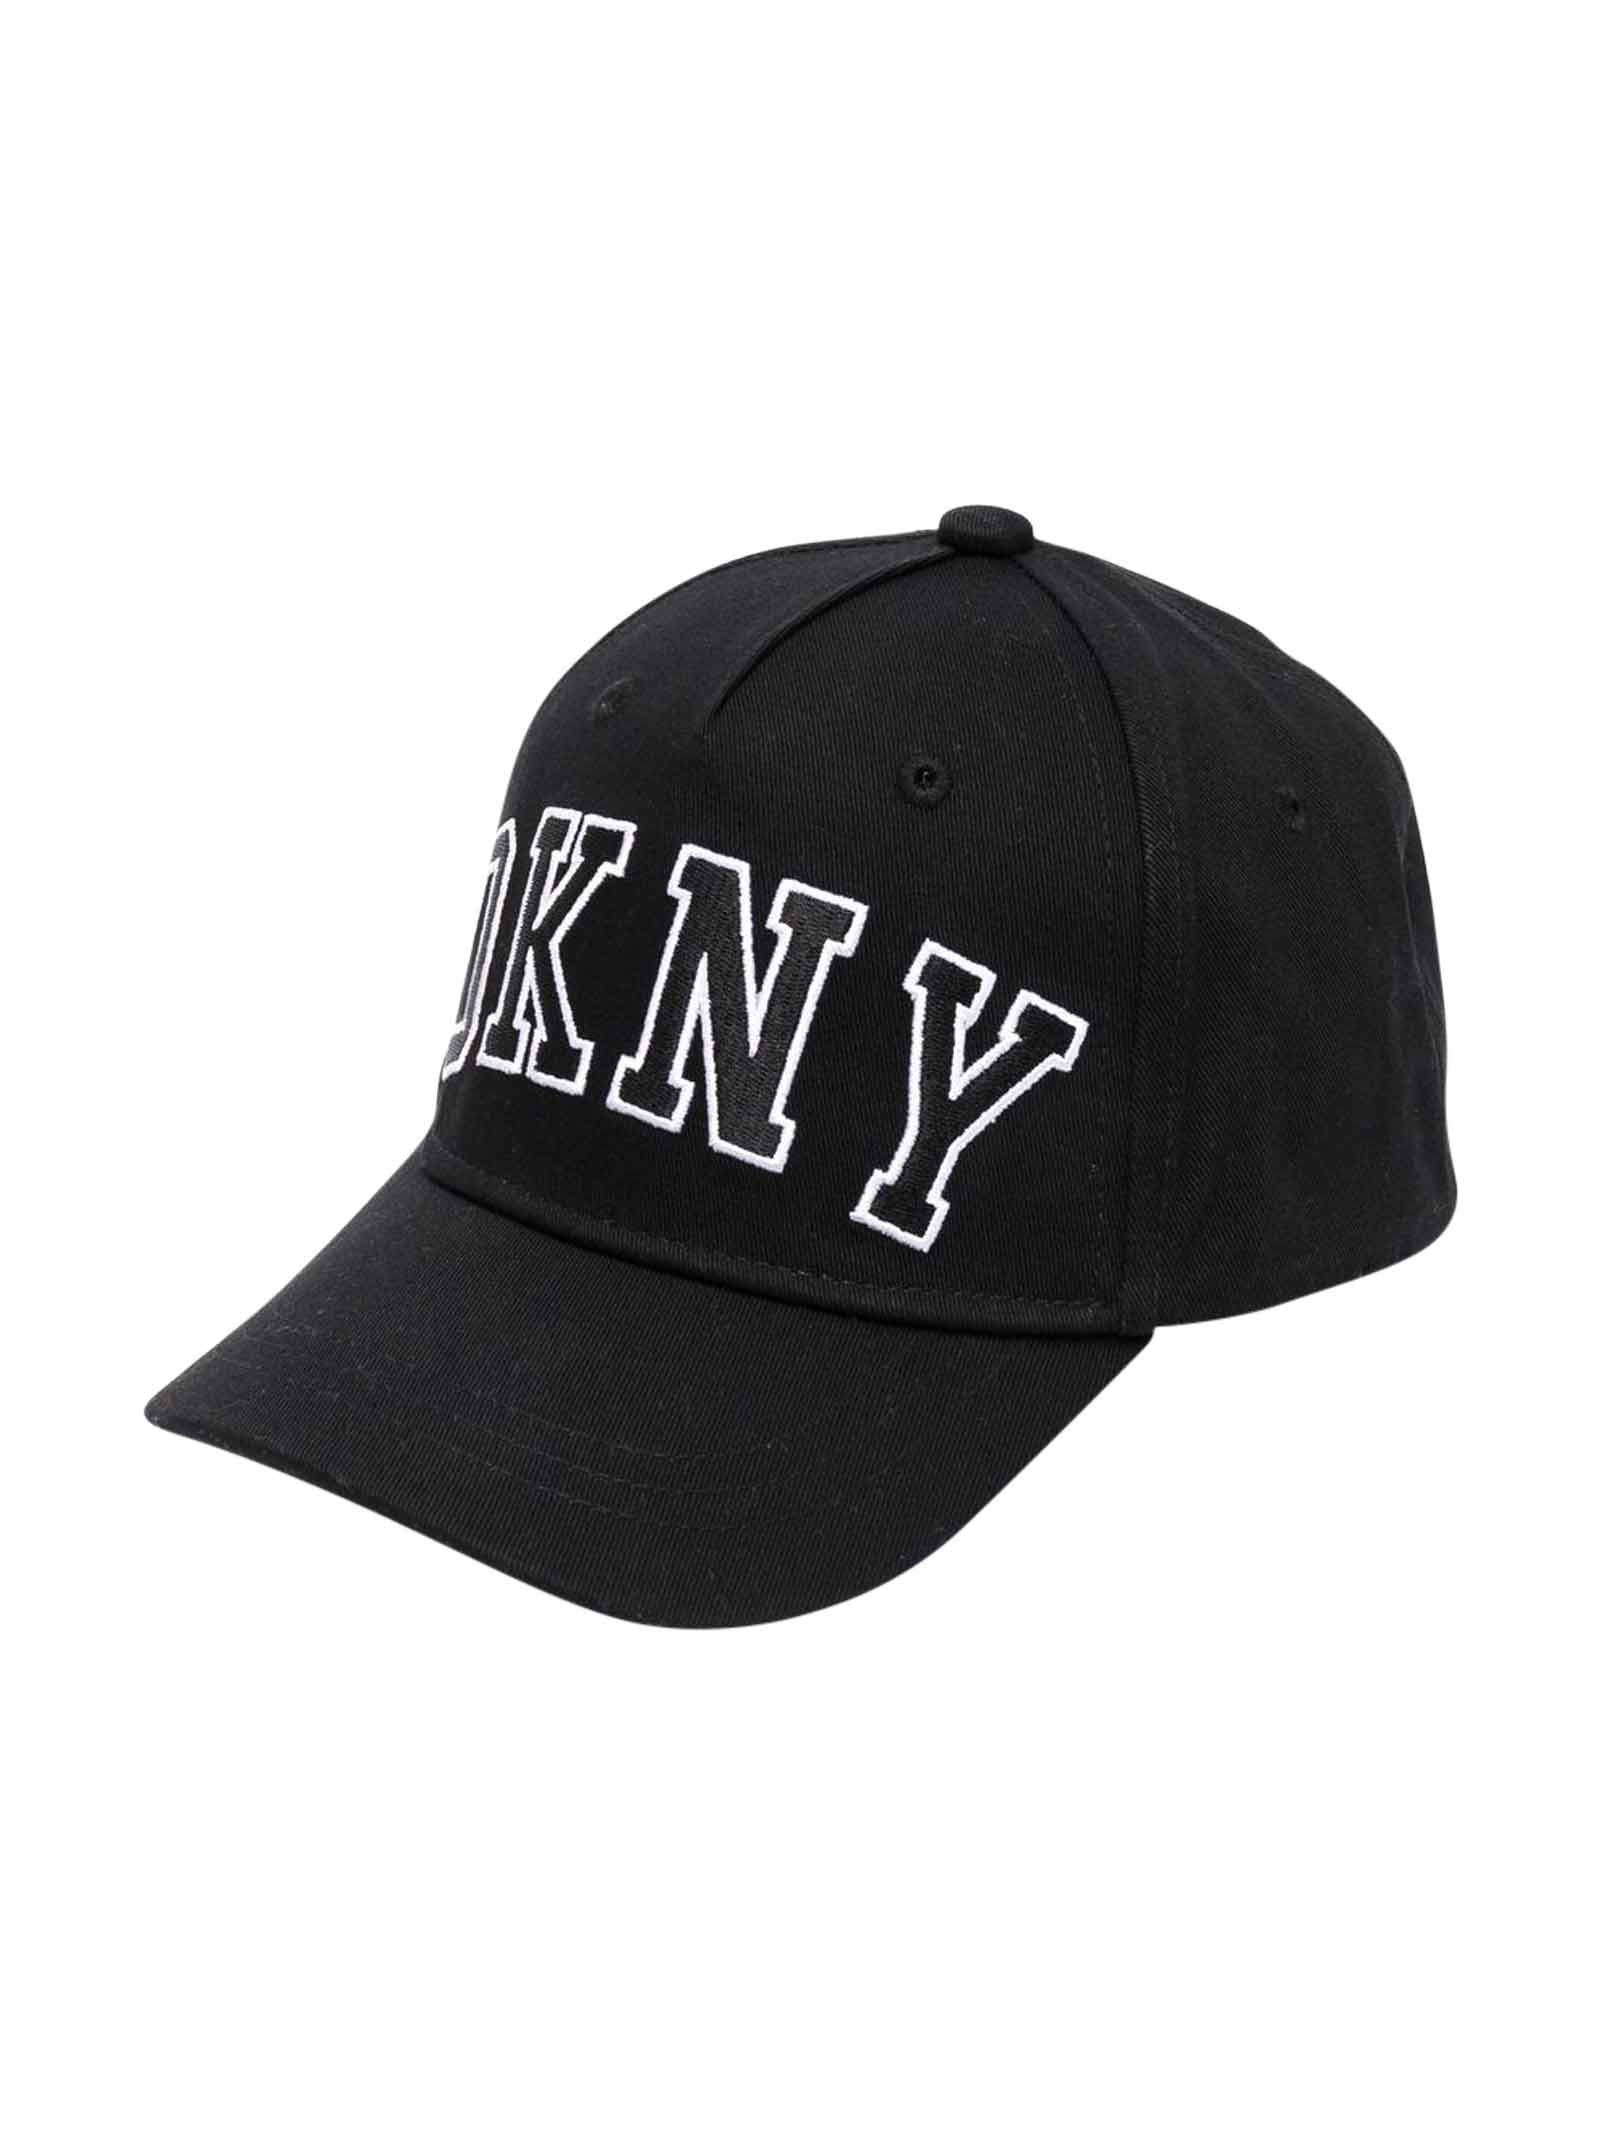 DKNY Unisex Black Hat